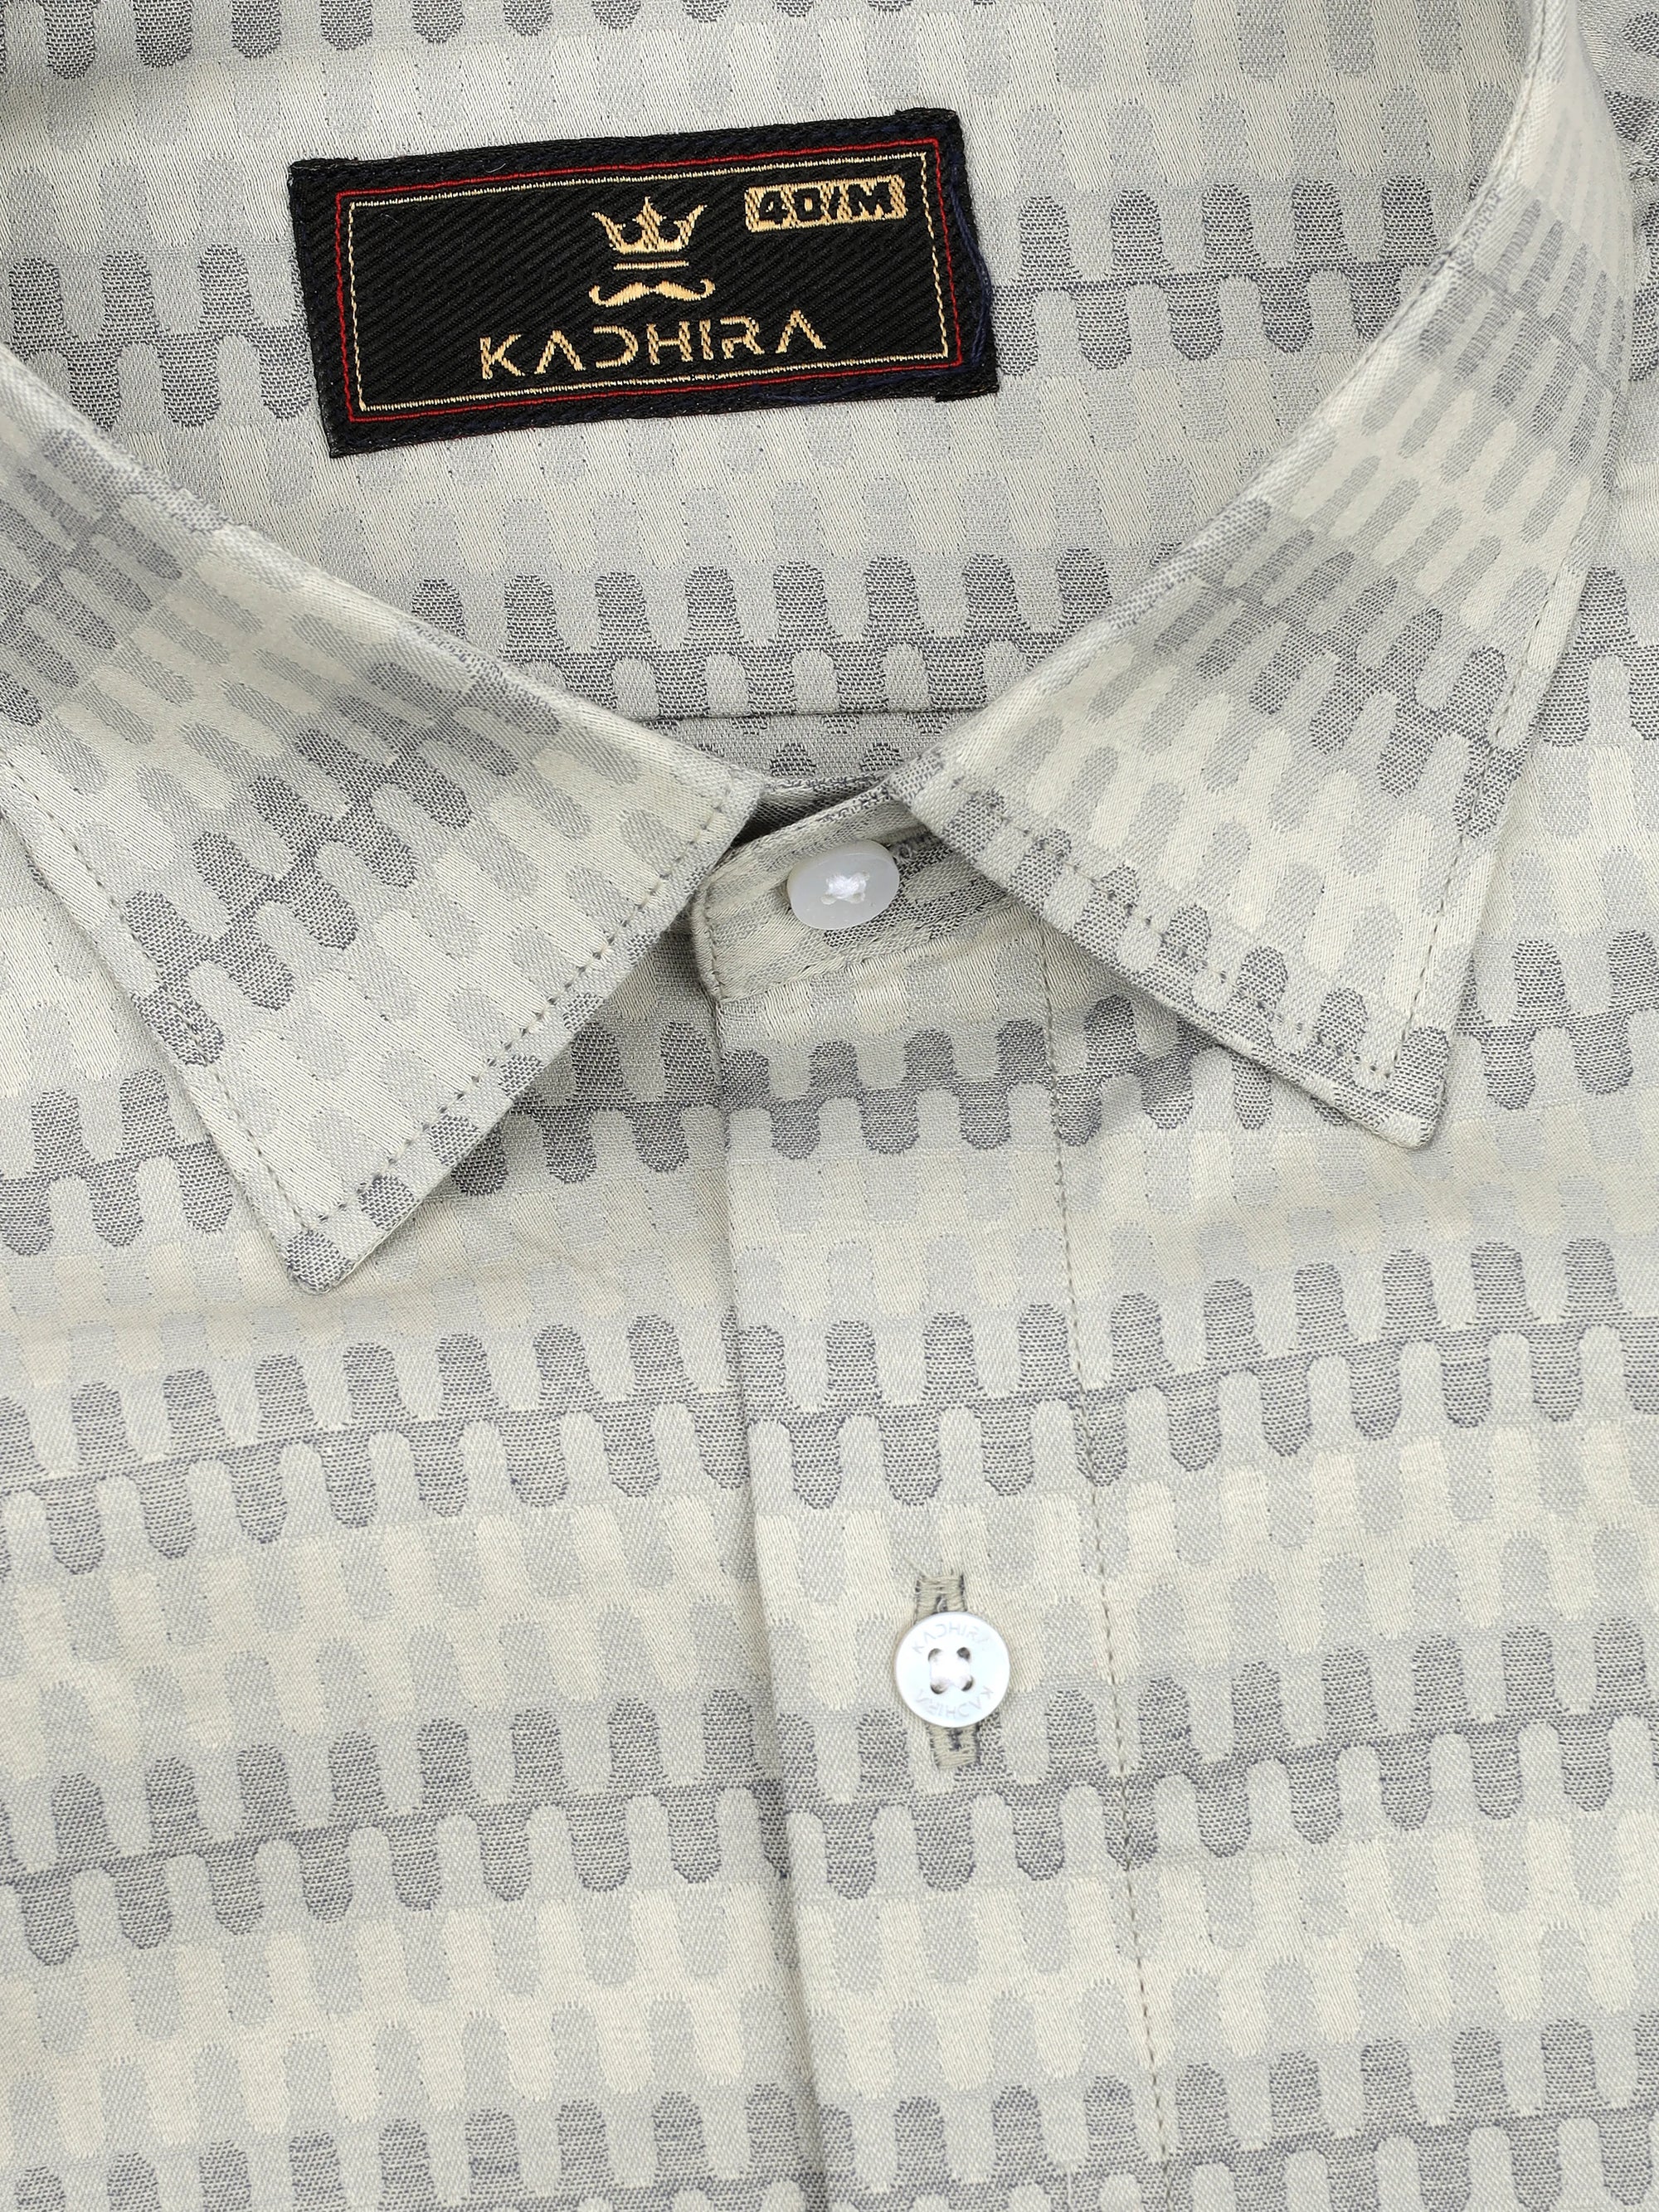 Gentle Gray Seamless Jacquard Premium Cotton Shirt